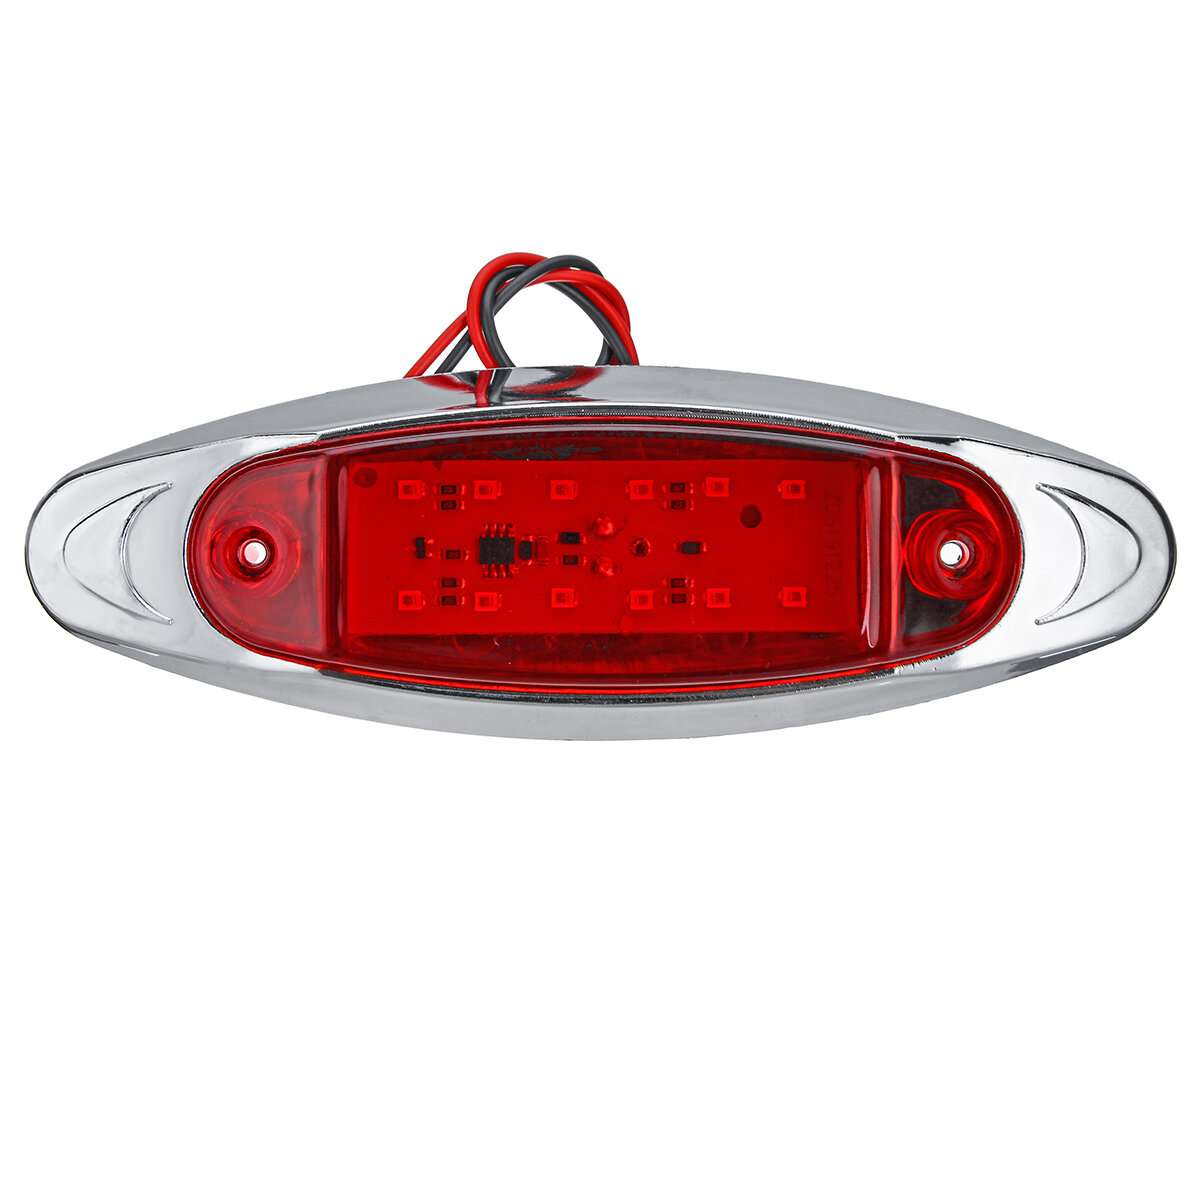 

6Pcs Red 24V LED Side Marker Light Flash Strobe Emergency Warning Lamp For Boat Car Truck Trailer